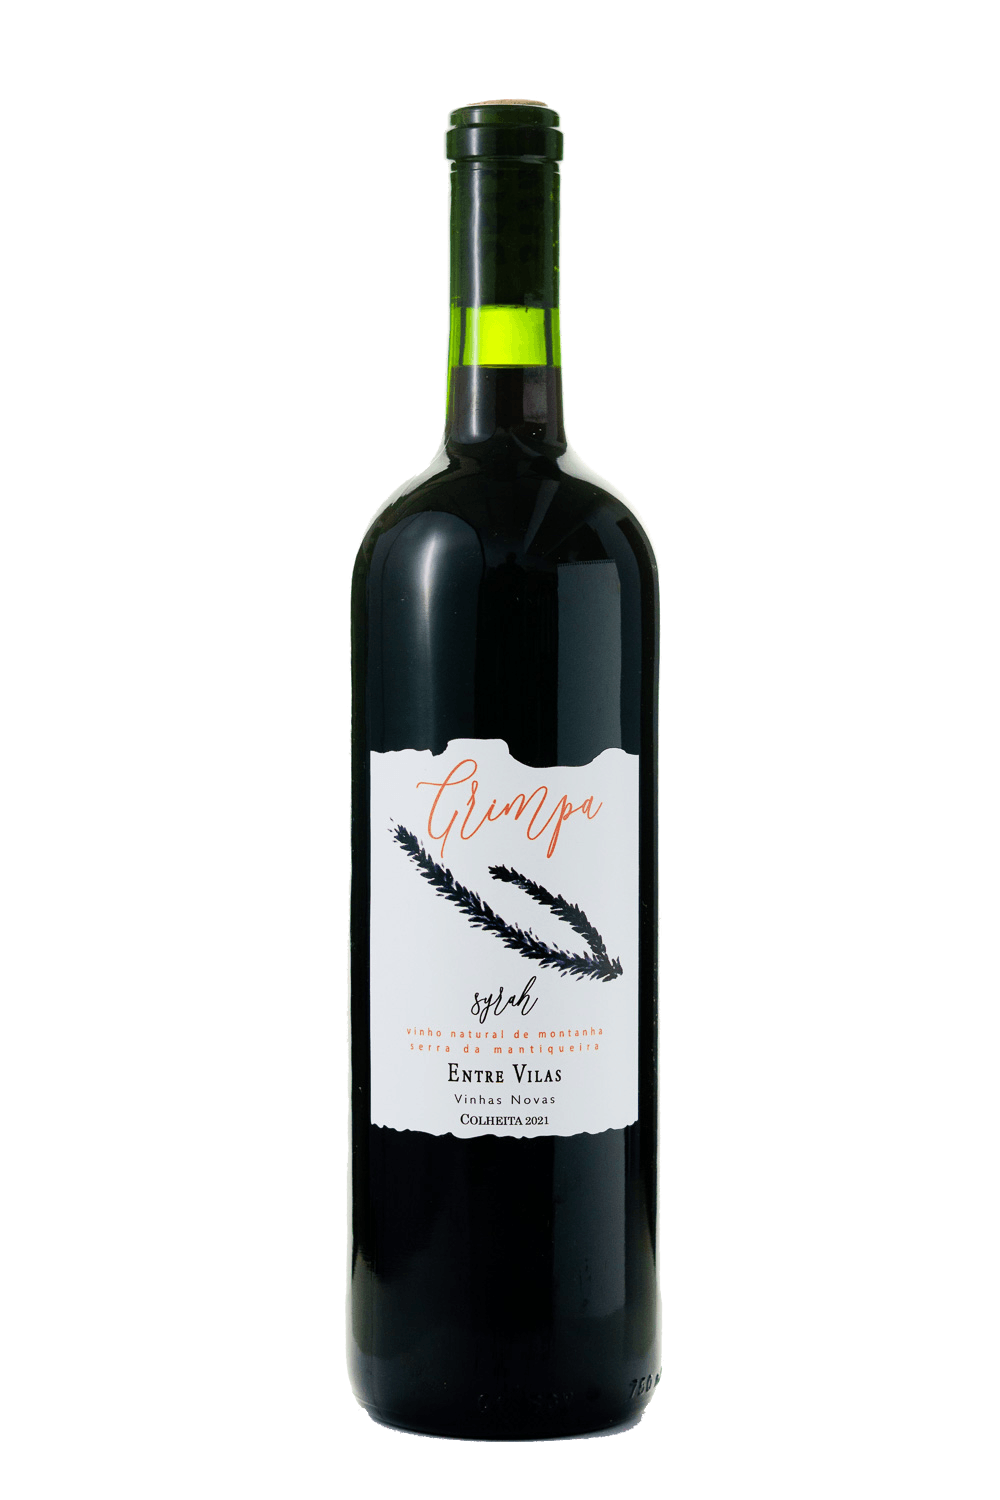 Entre Vilas - Grimpa Syrah - The Blend Wines